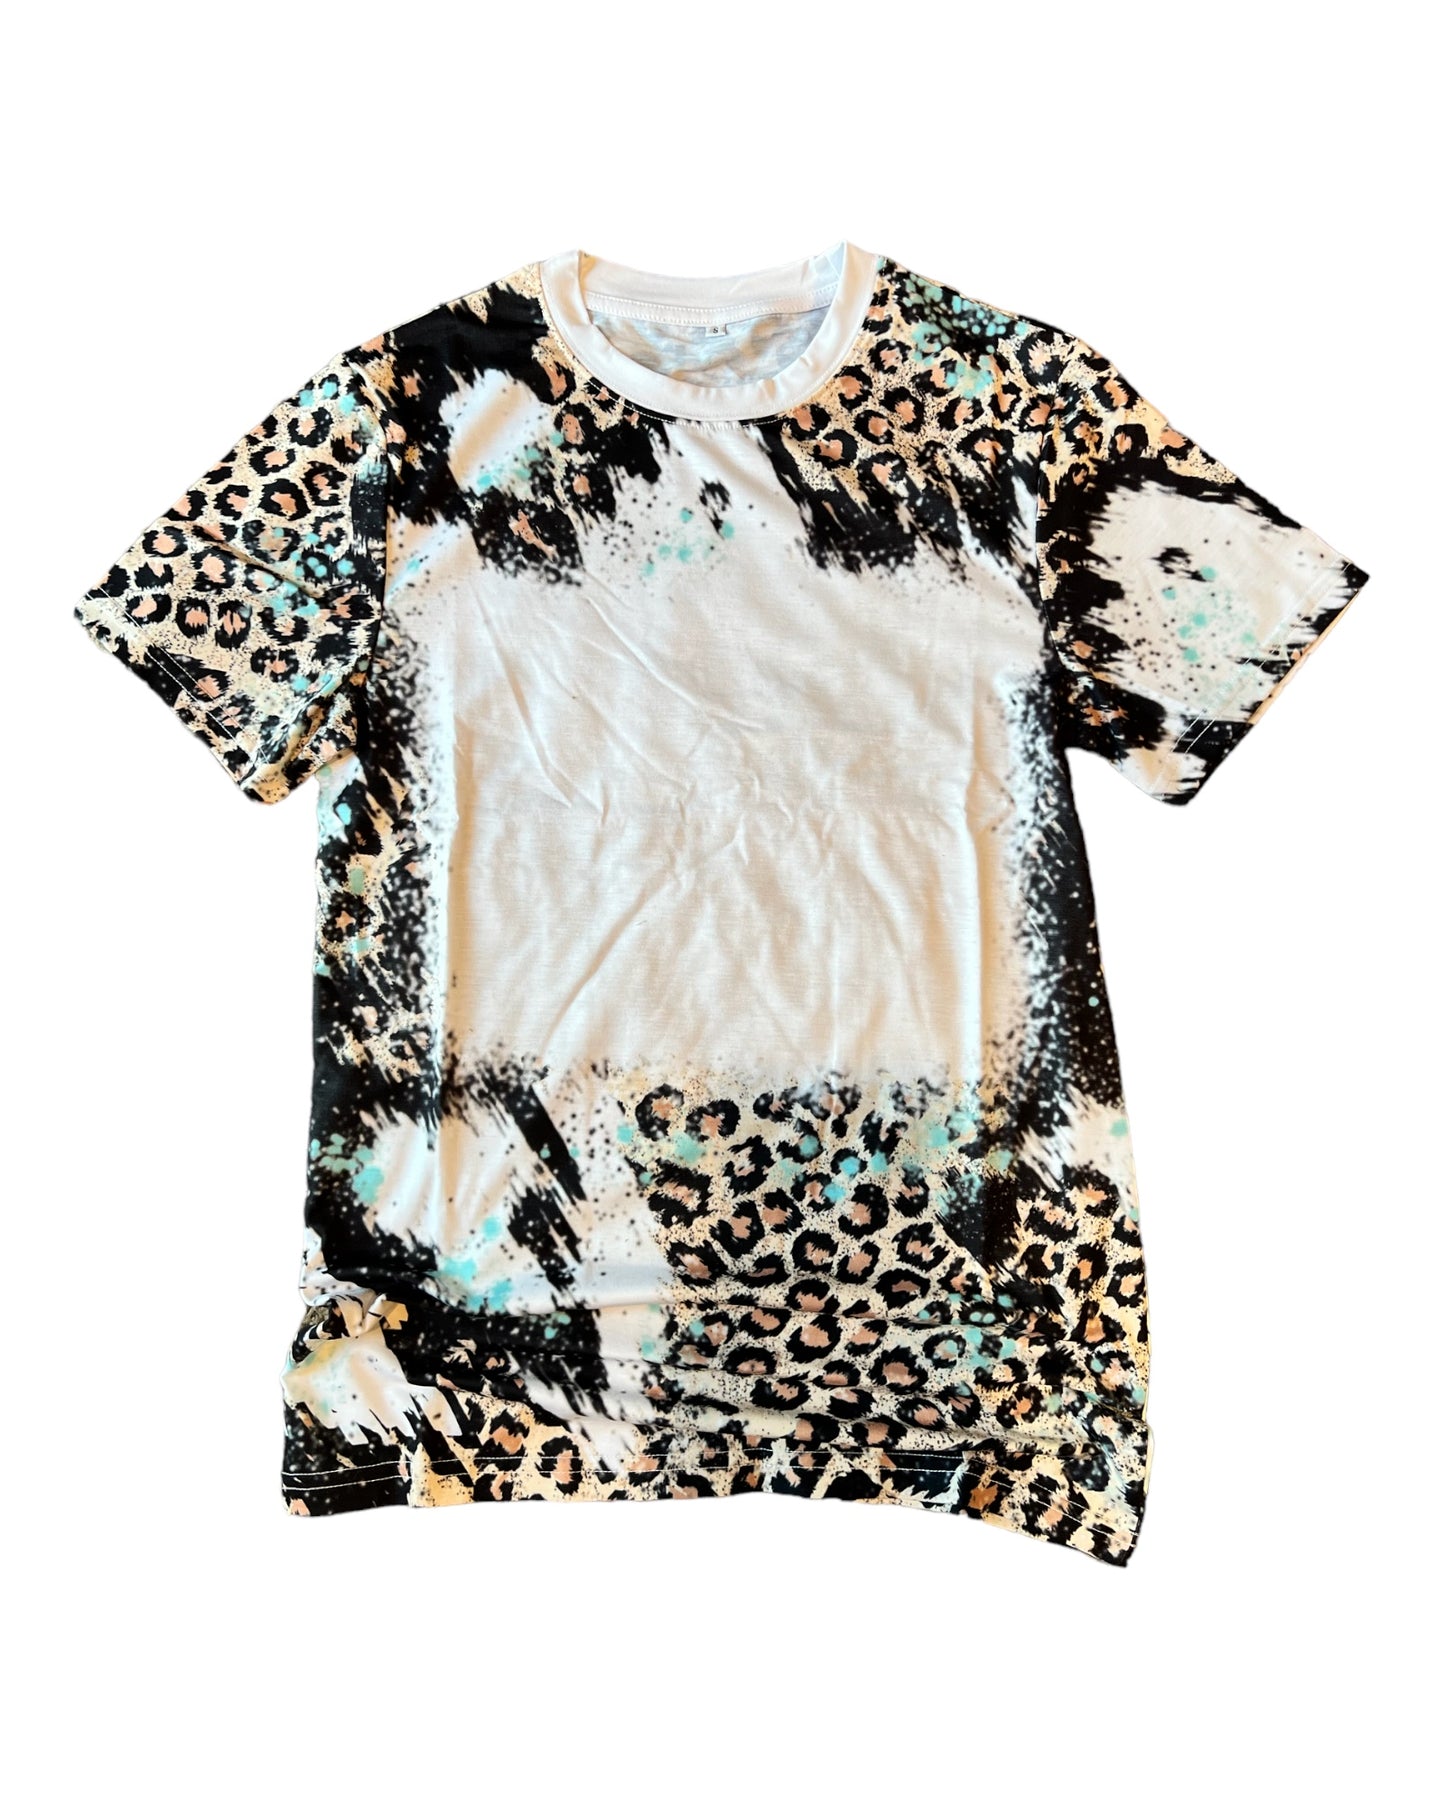 Cheetah Multi Color  Faux Bleached Tshirt